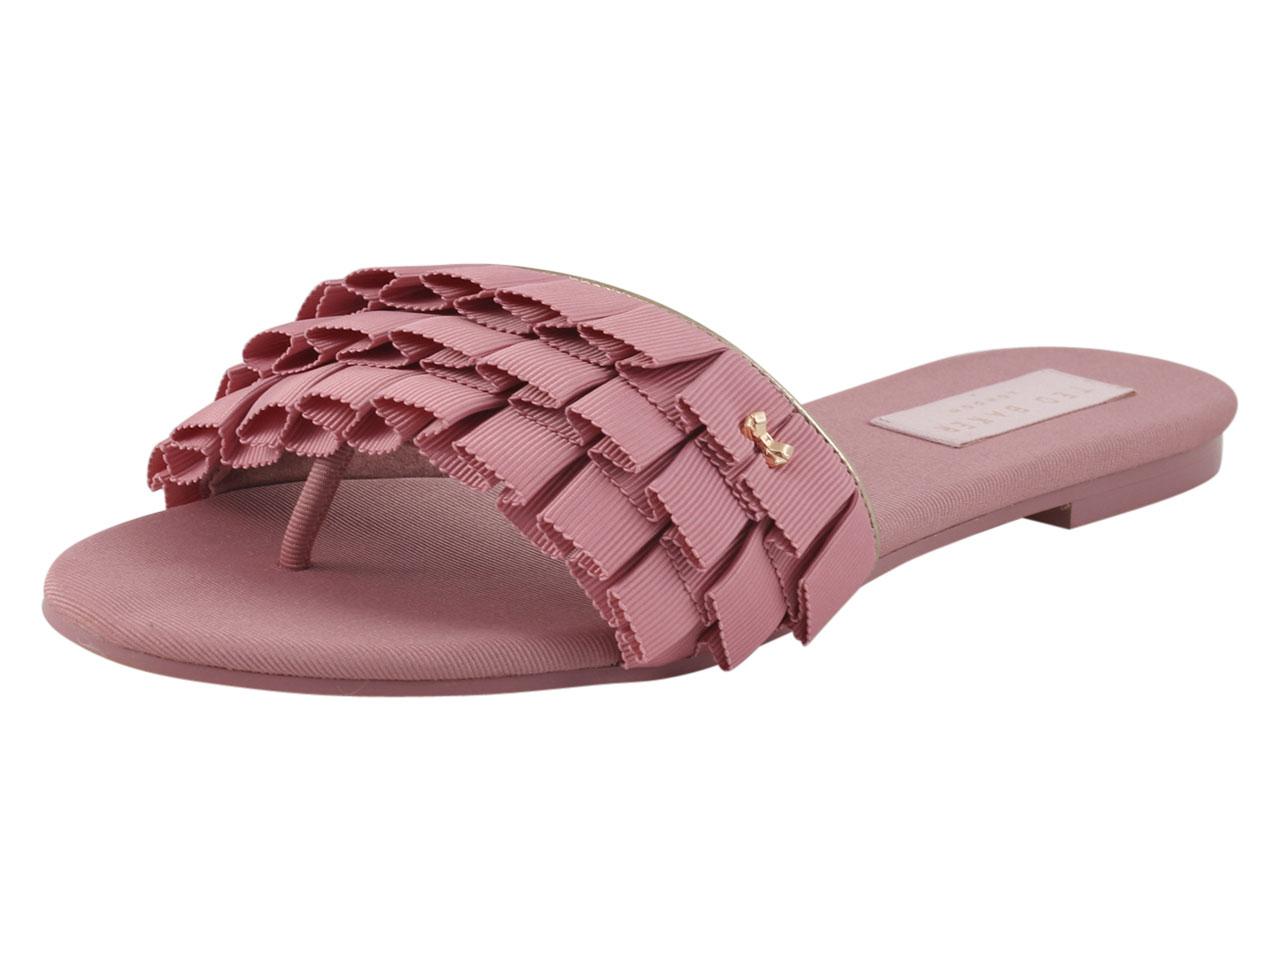 Ted Baker Women's Towdi Slide Sandals Shoes - Pink - 7 B(M) US